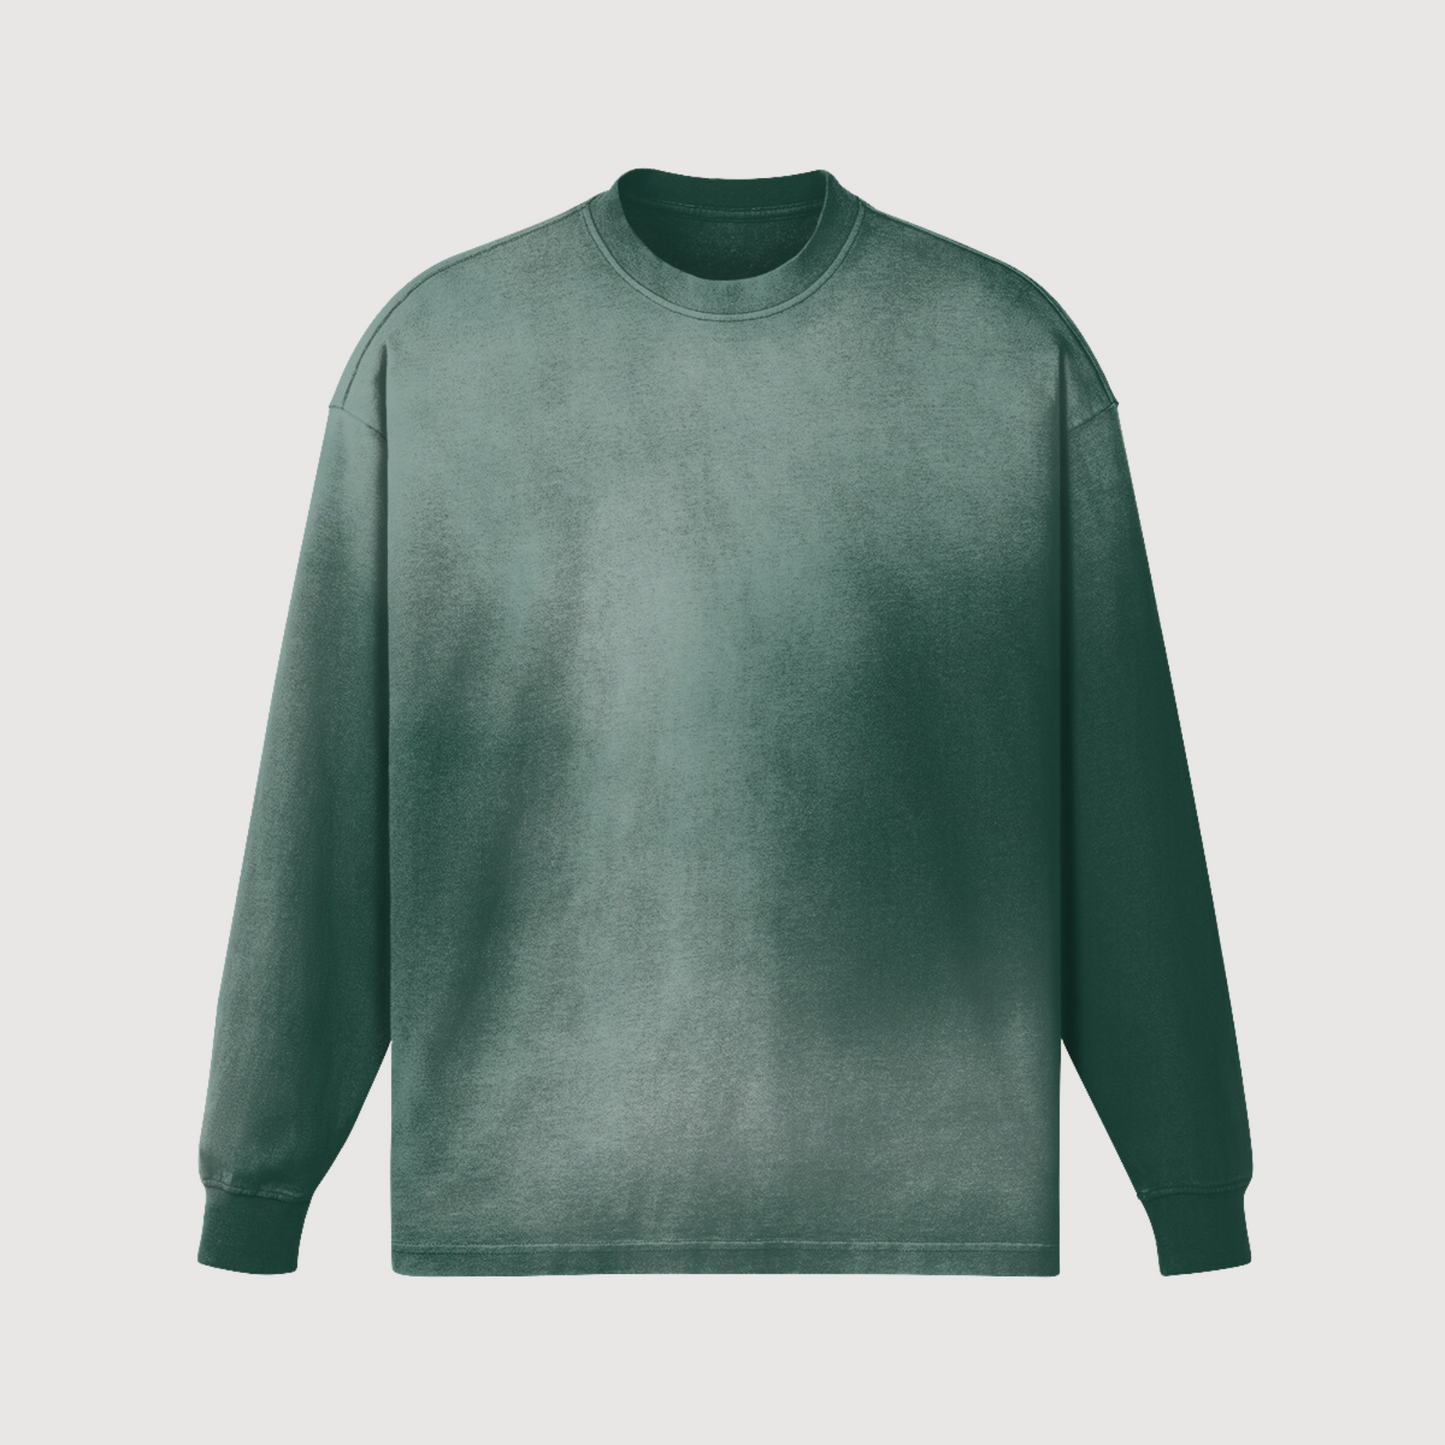 dyed green crewneck oversized sweatshirt drop shoulder streetwear long sleeves